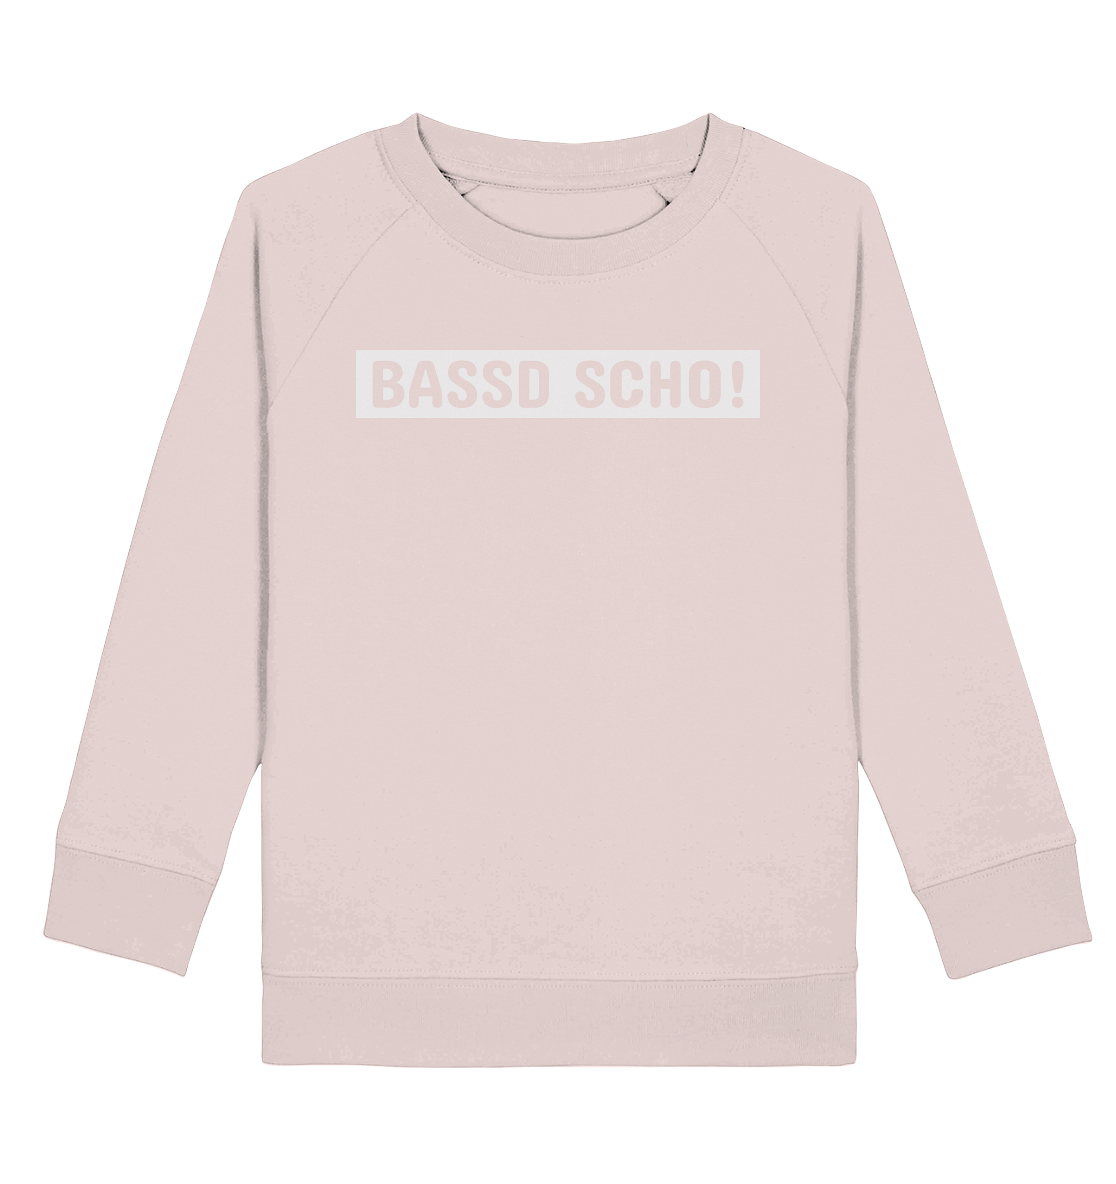 #BASSDSCHO! - Kids Organic Sweatshirt